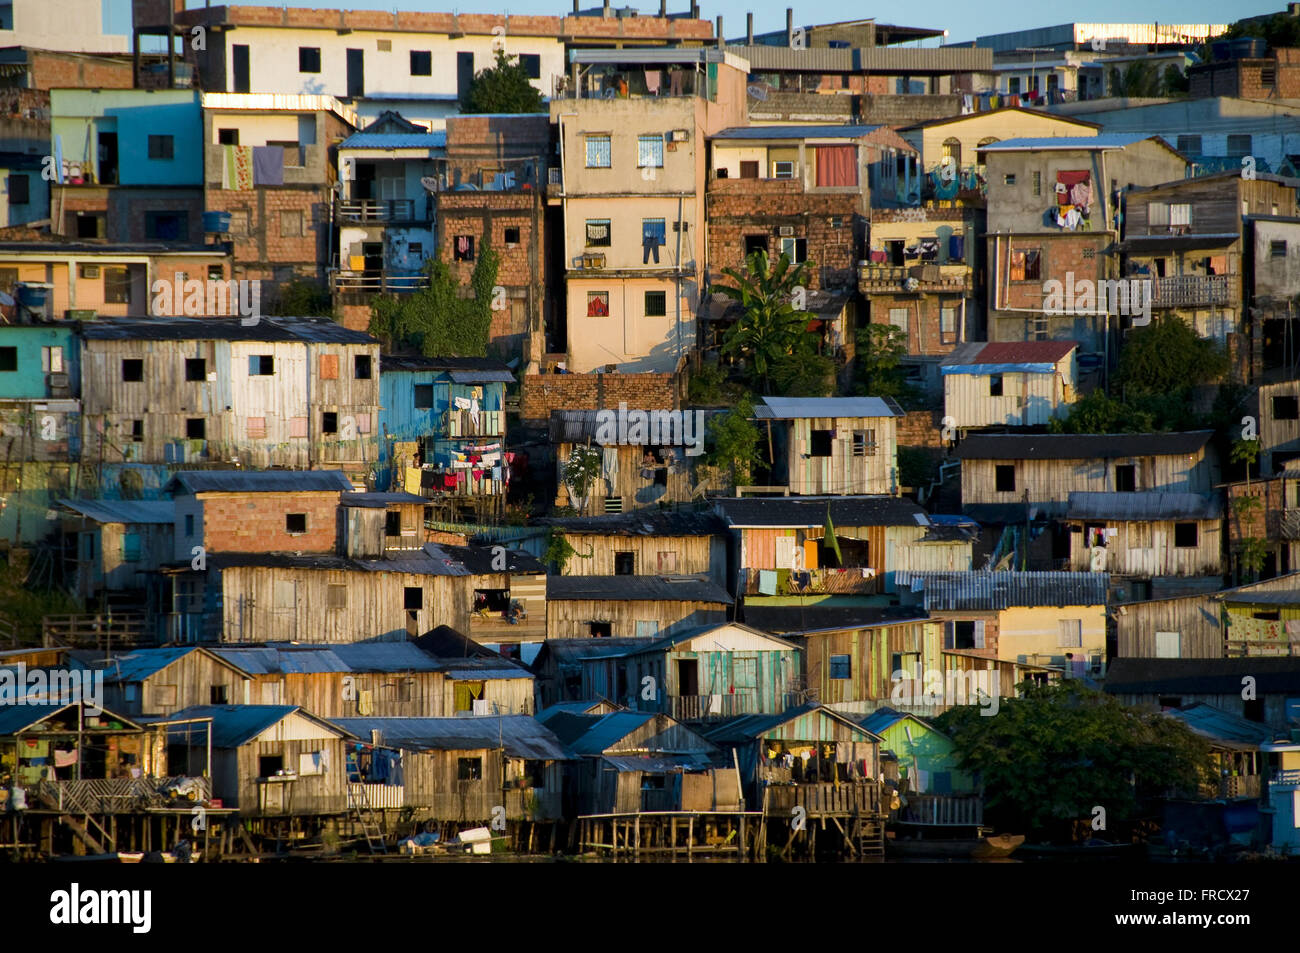 Habitation and stilts on the banks of the creek Educandos city of Manaus Stock Photo